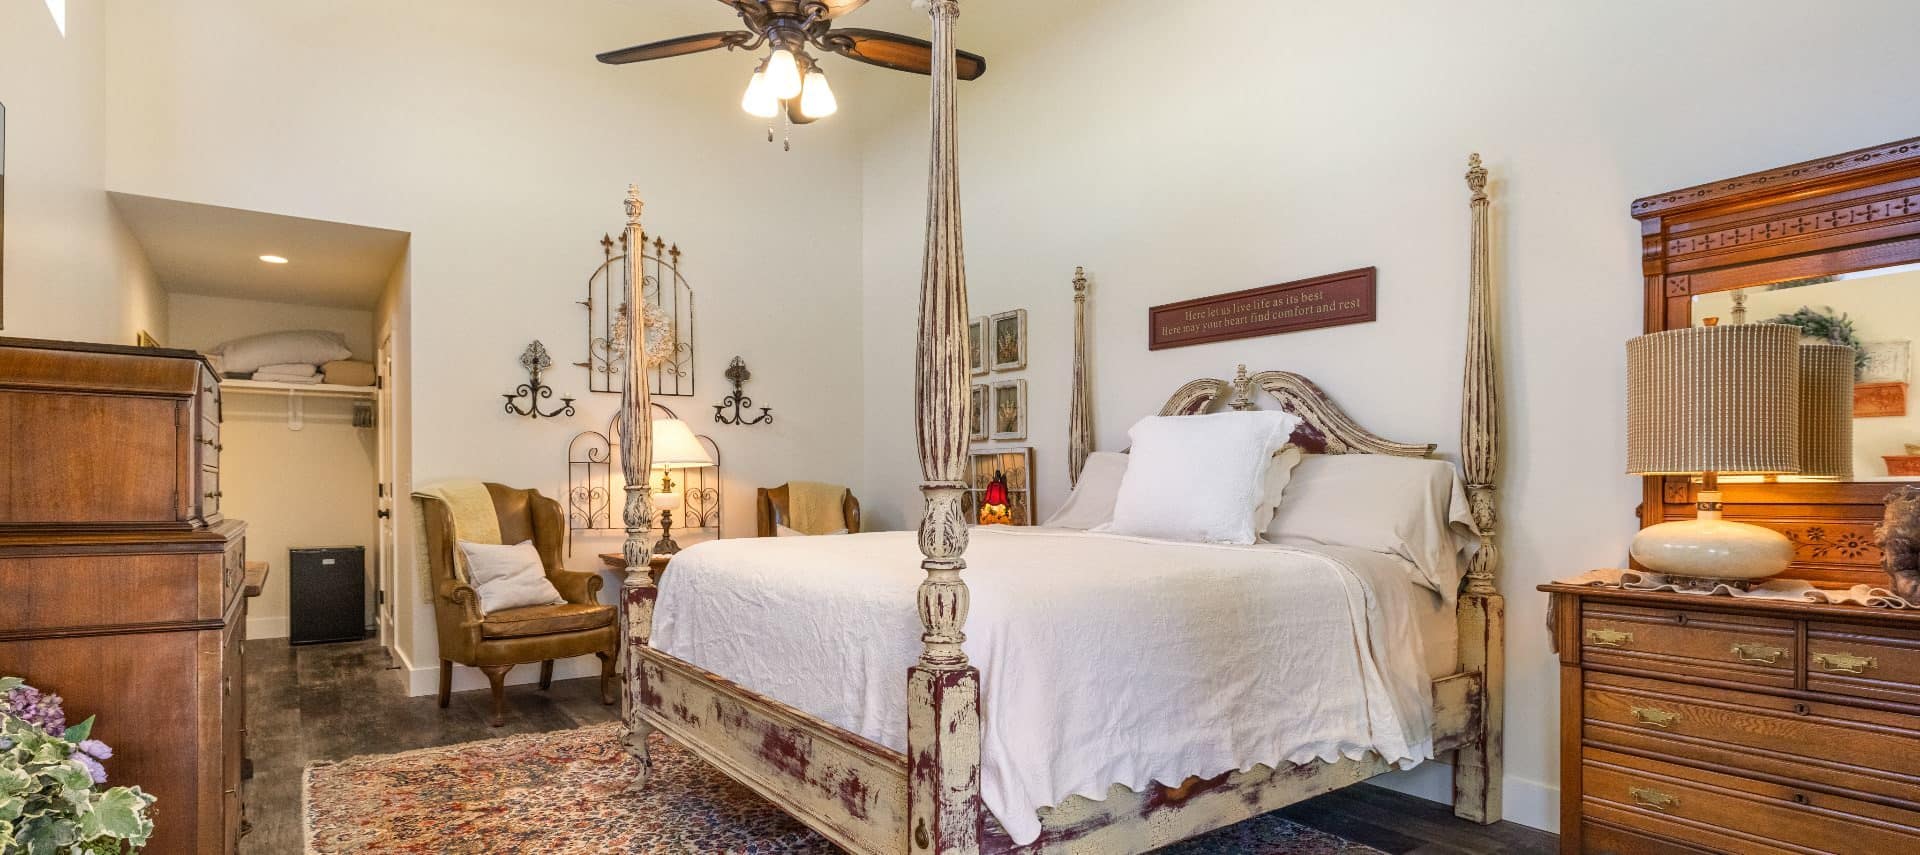 Large bedroom with four-poster bed, white bedding, dark hardwood flooring, large area rug, wooden furniture, and celing fan